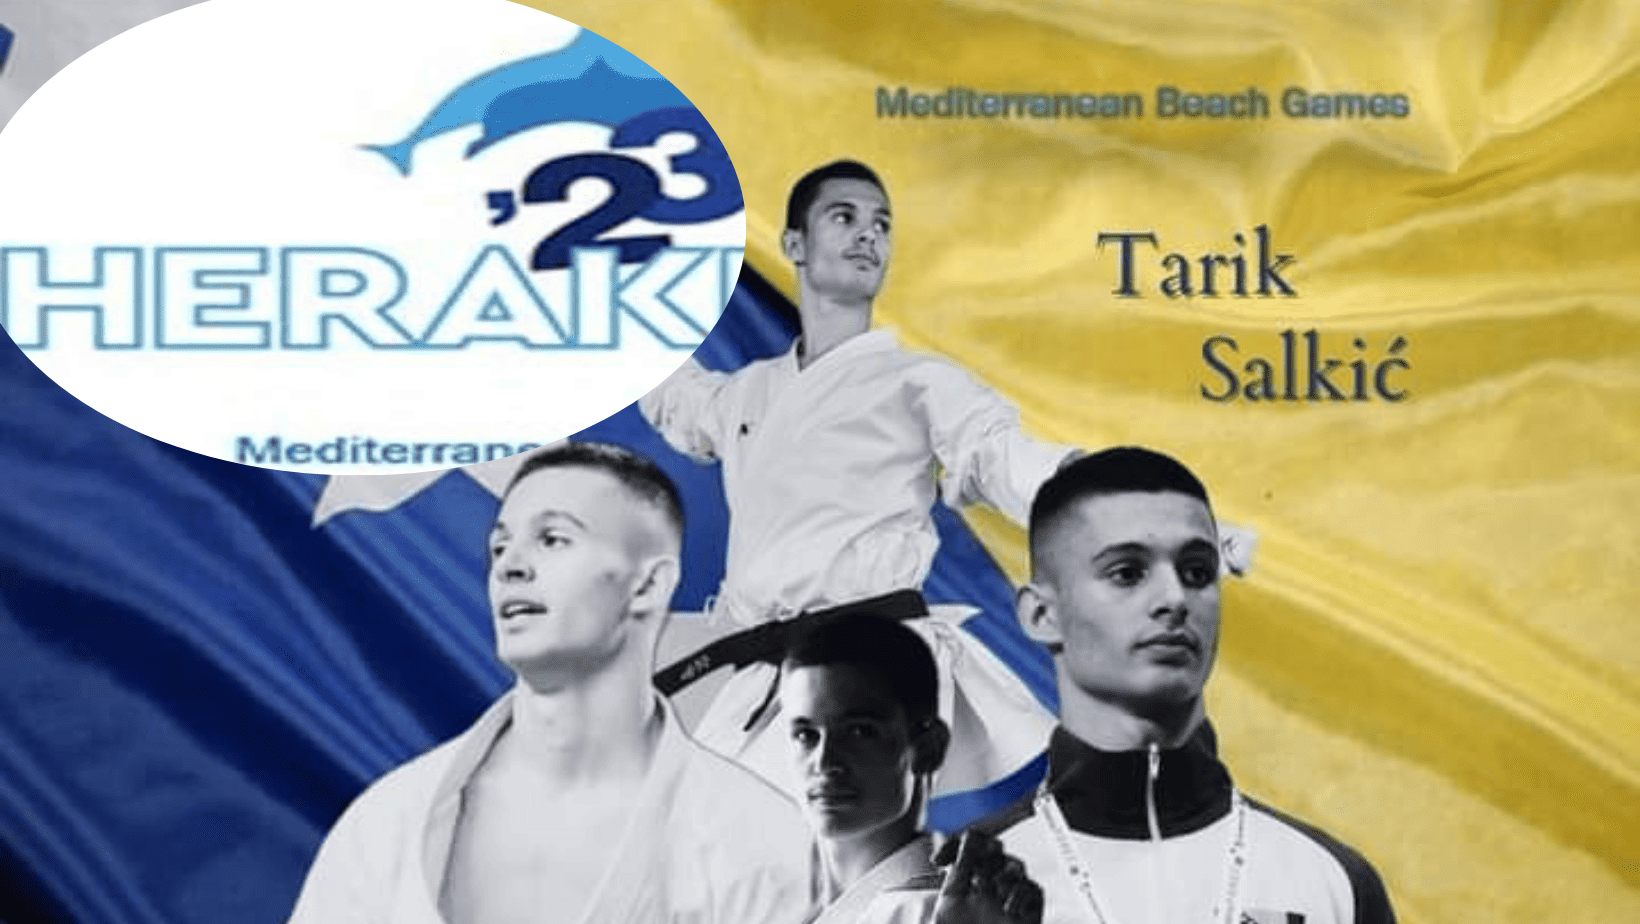 Kladuščanin Tarik Salkić predstavlja BiH na Mediteranskim igrama u Grčkoj